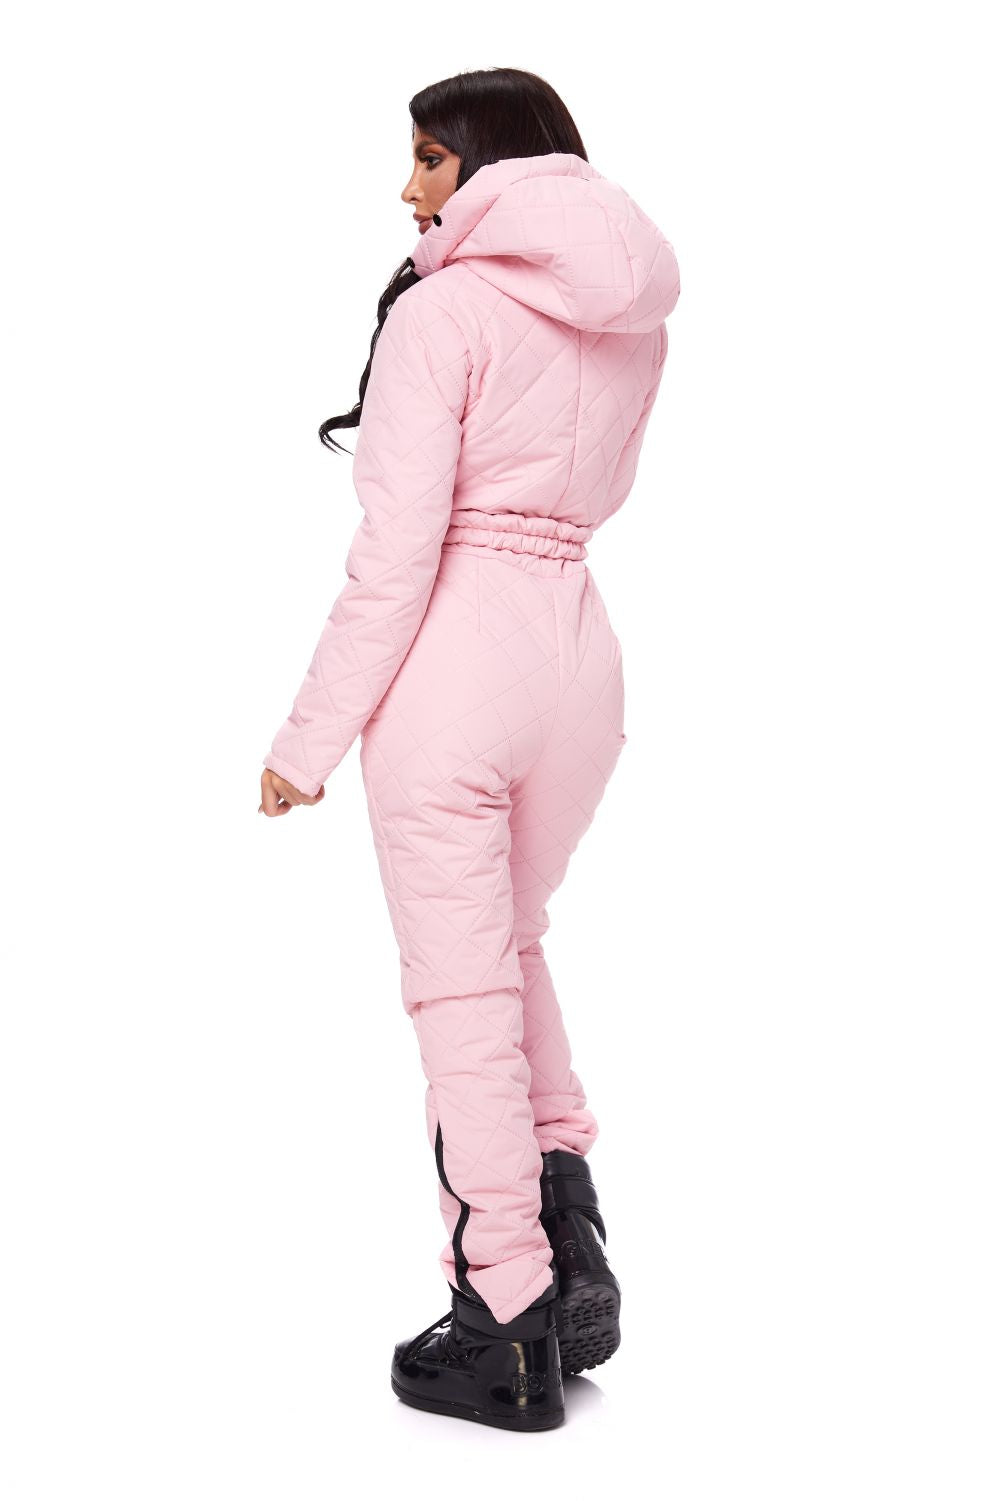 Yvels Bogas casual pink ski jumpsuit